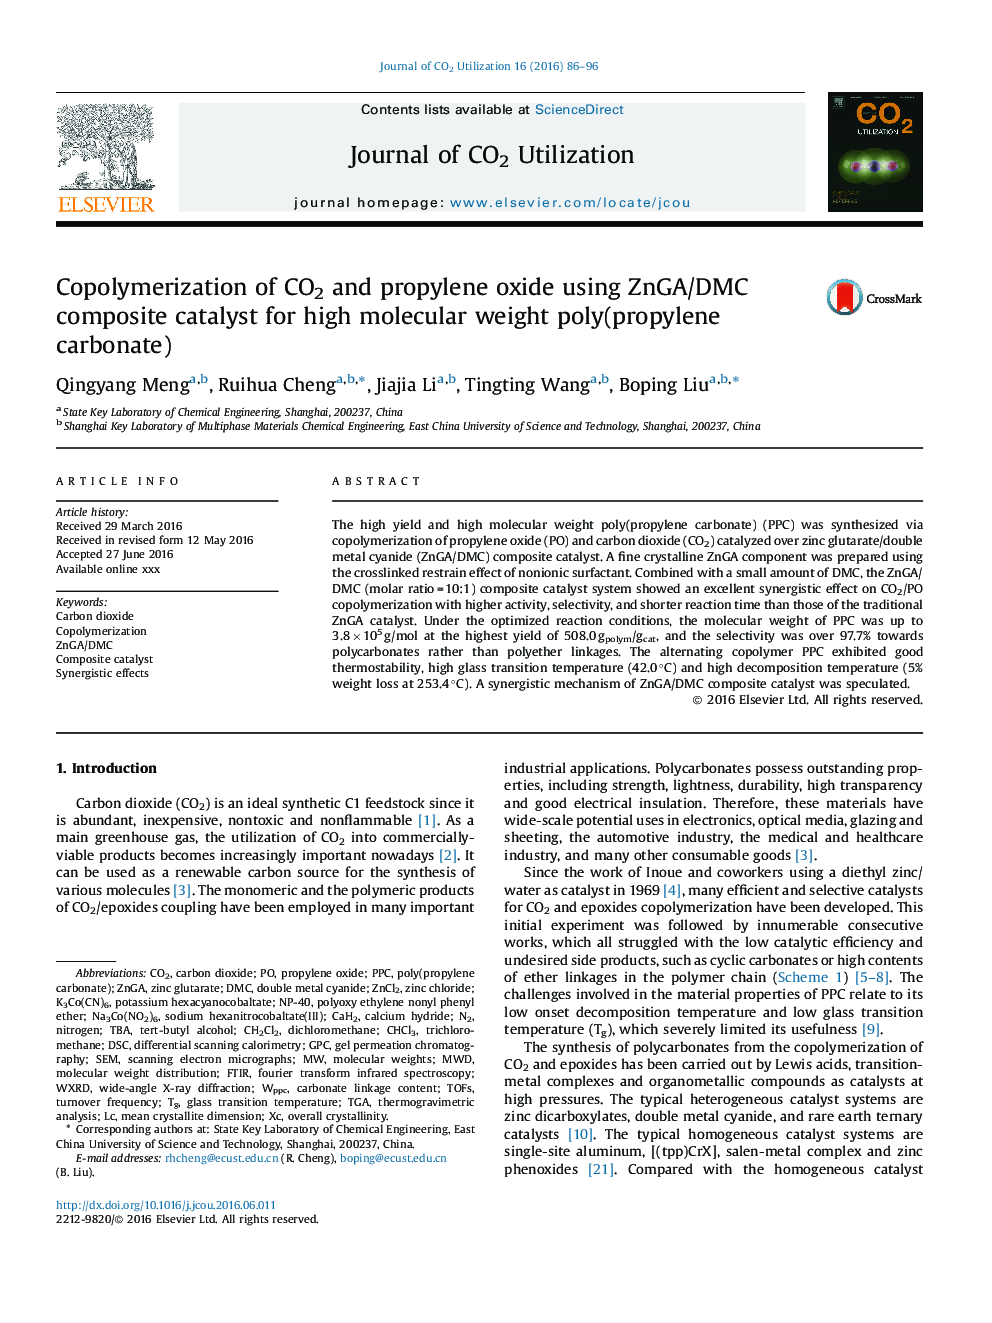 copolymerization از CO2 و پروپیلن اکسید با استفاده از کاتالیزور کامپوزیت ZnGA DMC برای پلی(کربنات پروپیلن) با وزن مولکولی بالا 